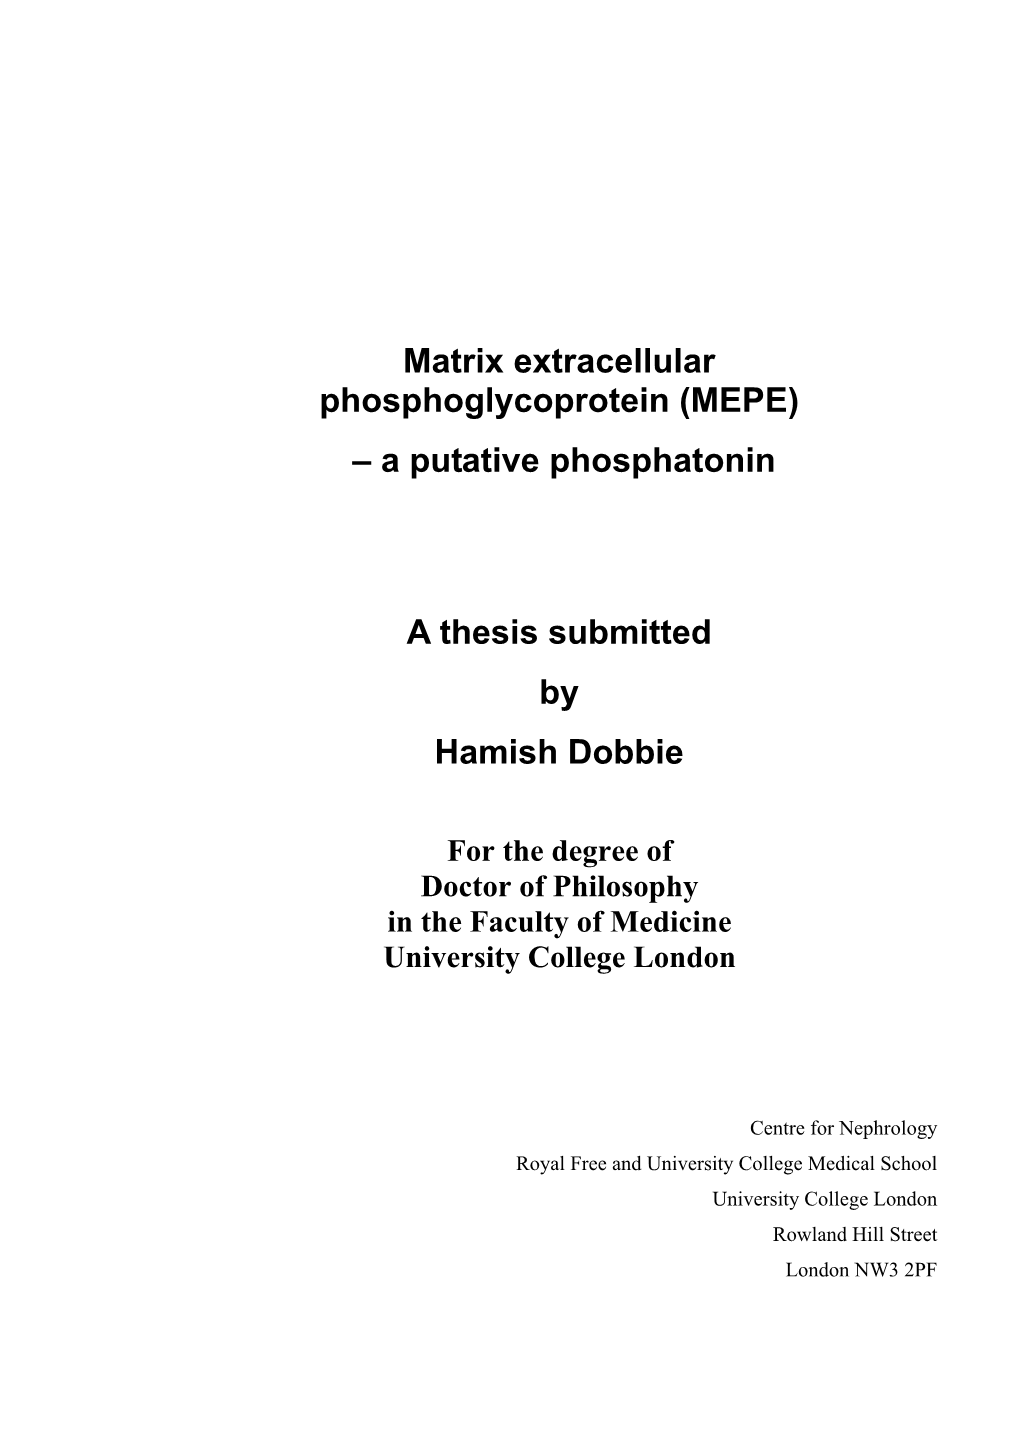 Matrix Extracellular Phosphoglycoprotein (MEPE): A